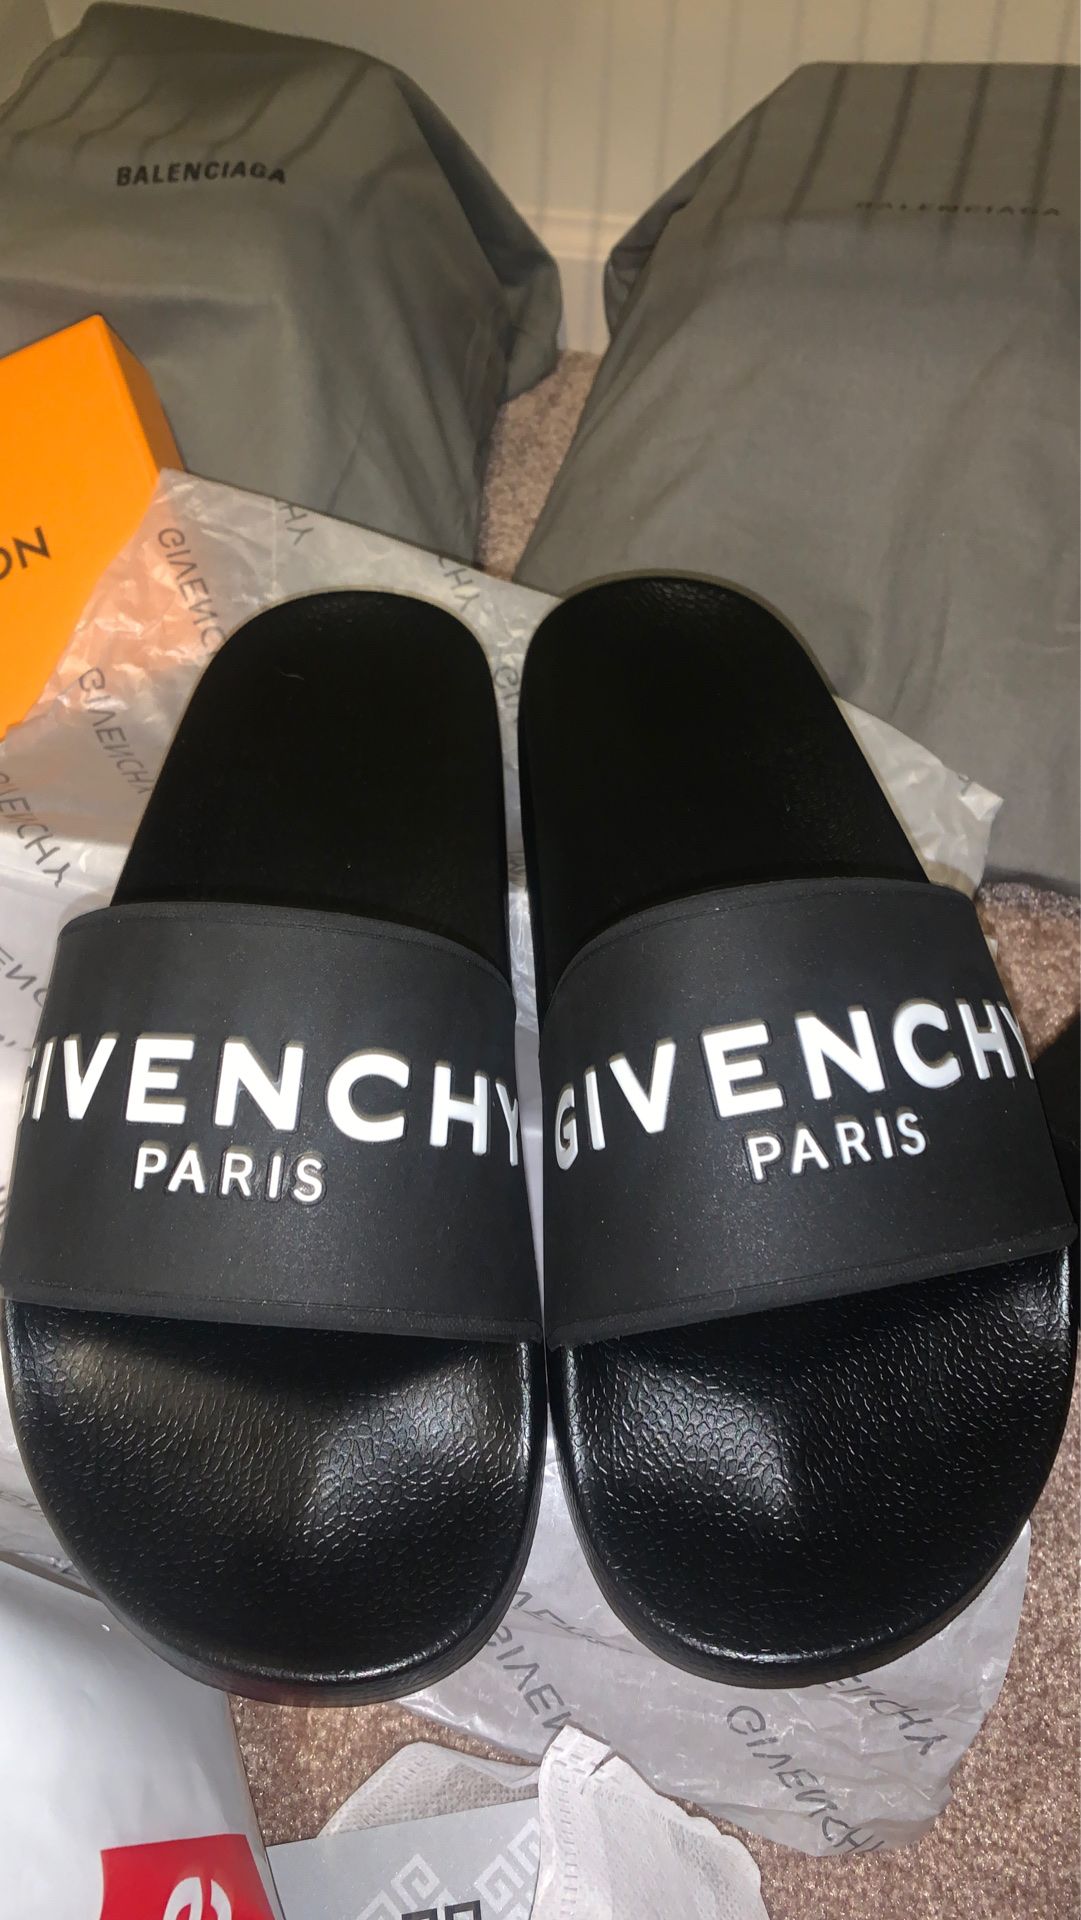 Givenchy Slides